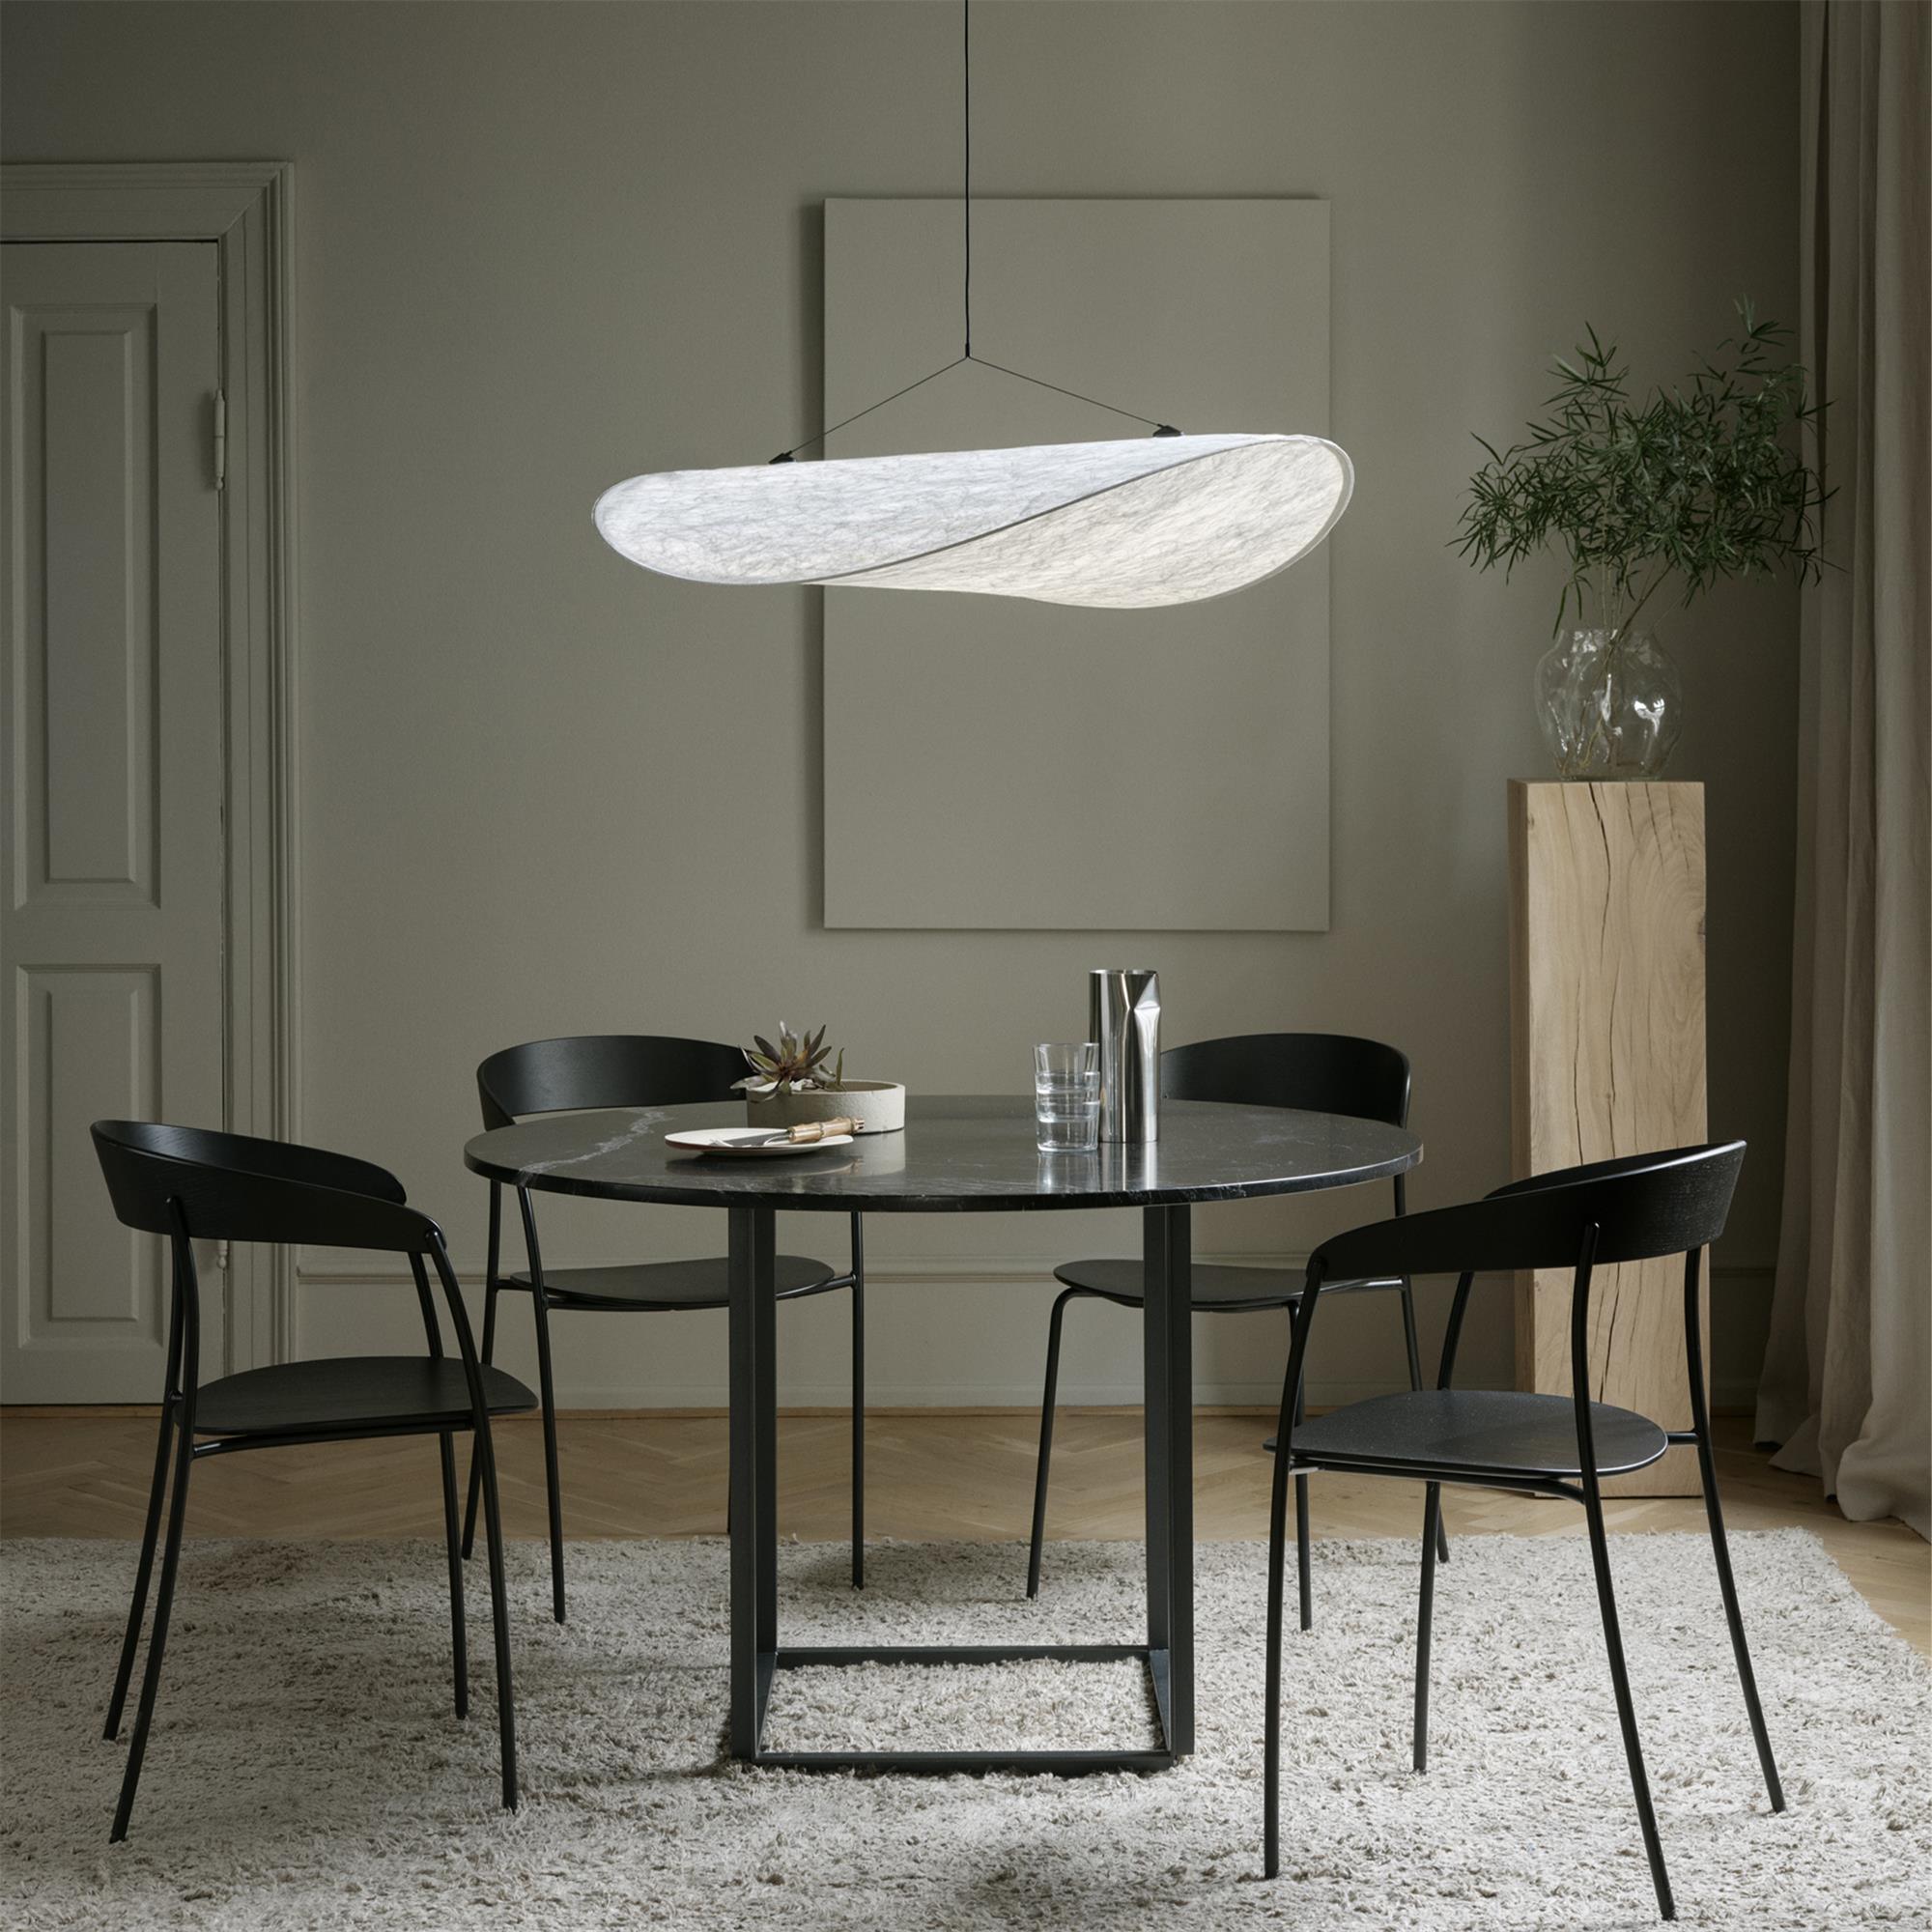 Nordic Style Aluminum PH Artichoke Lamp Ceiling Pendants Chandelier  White/Silver